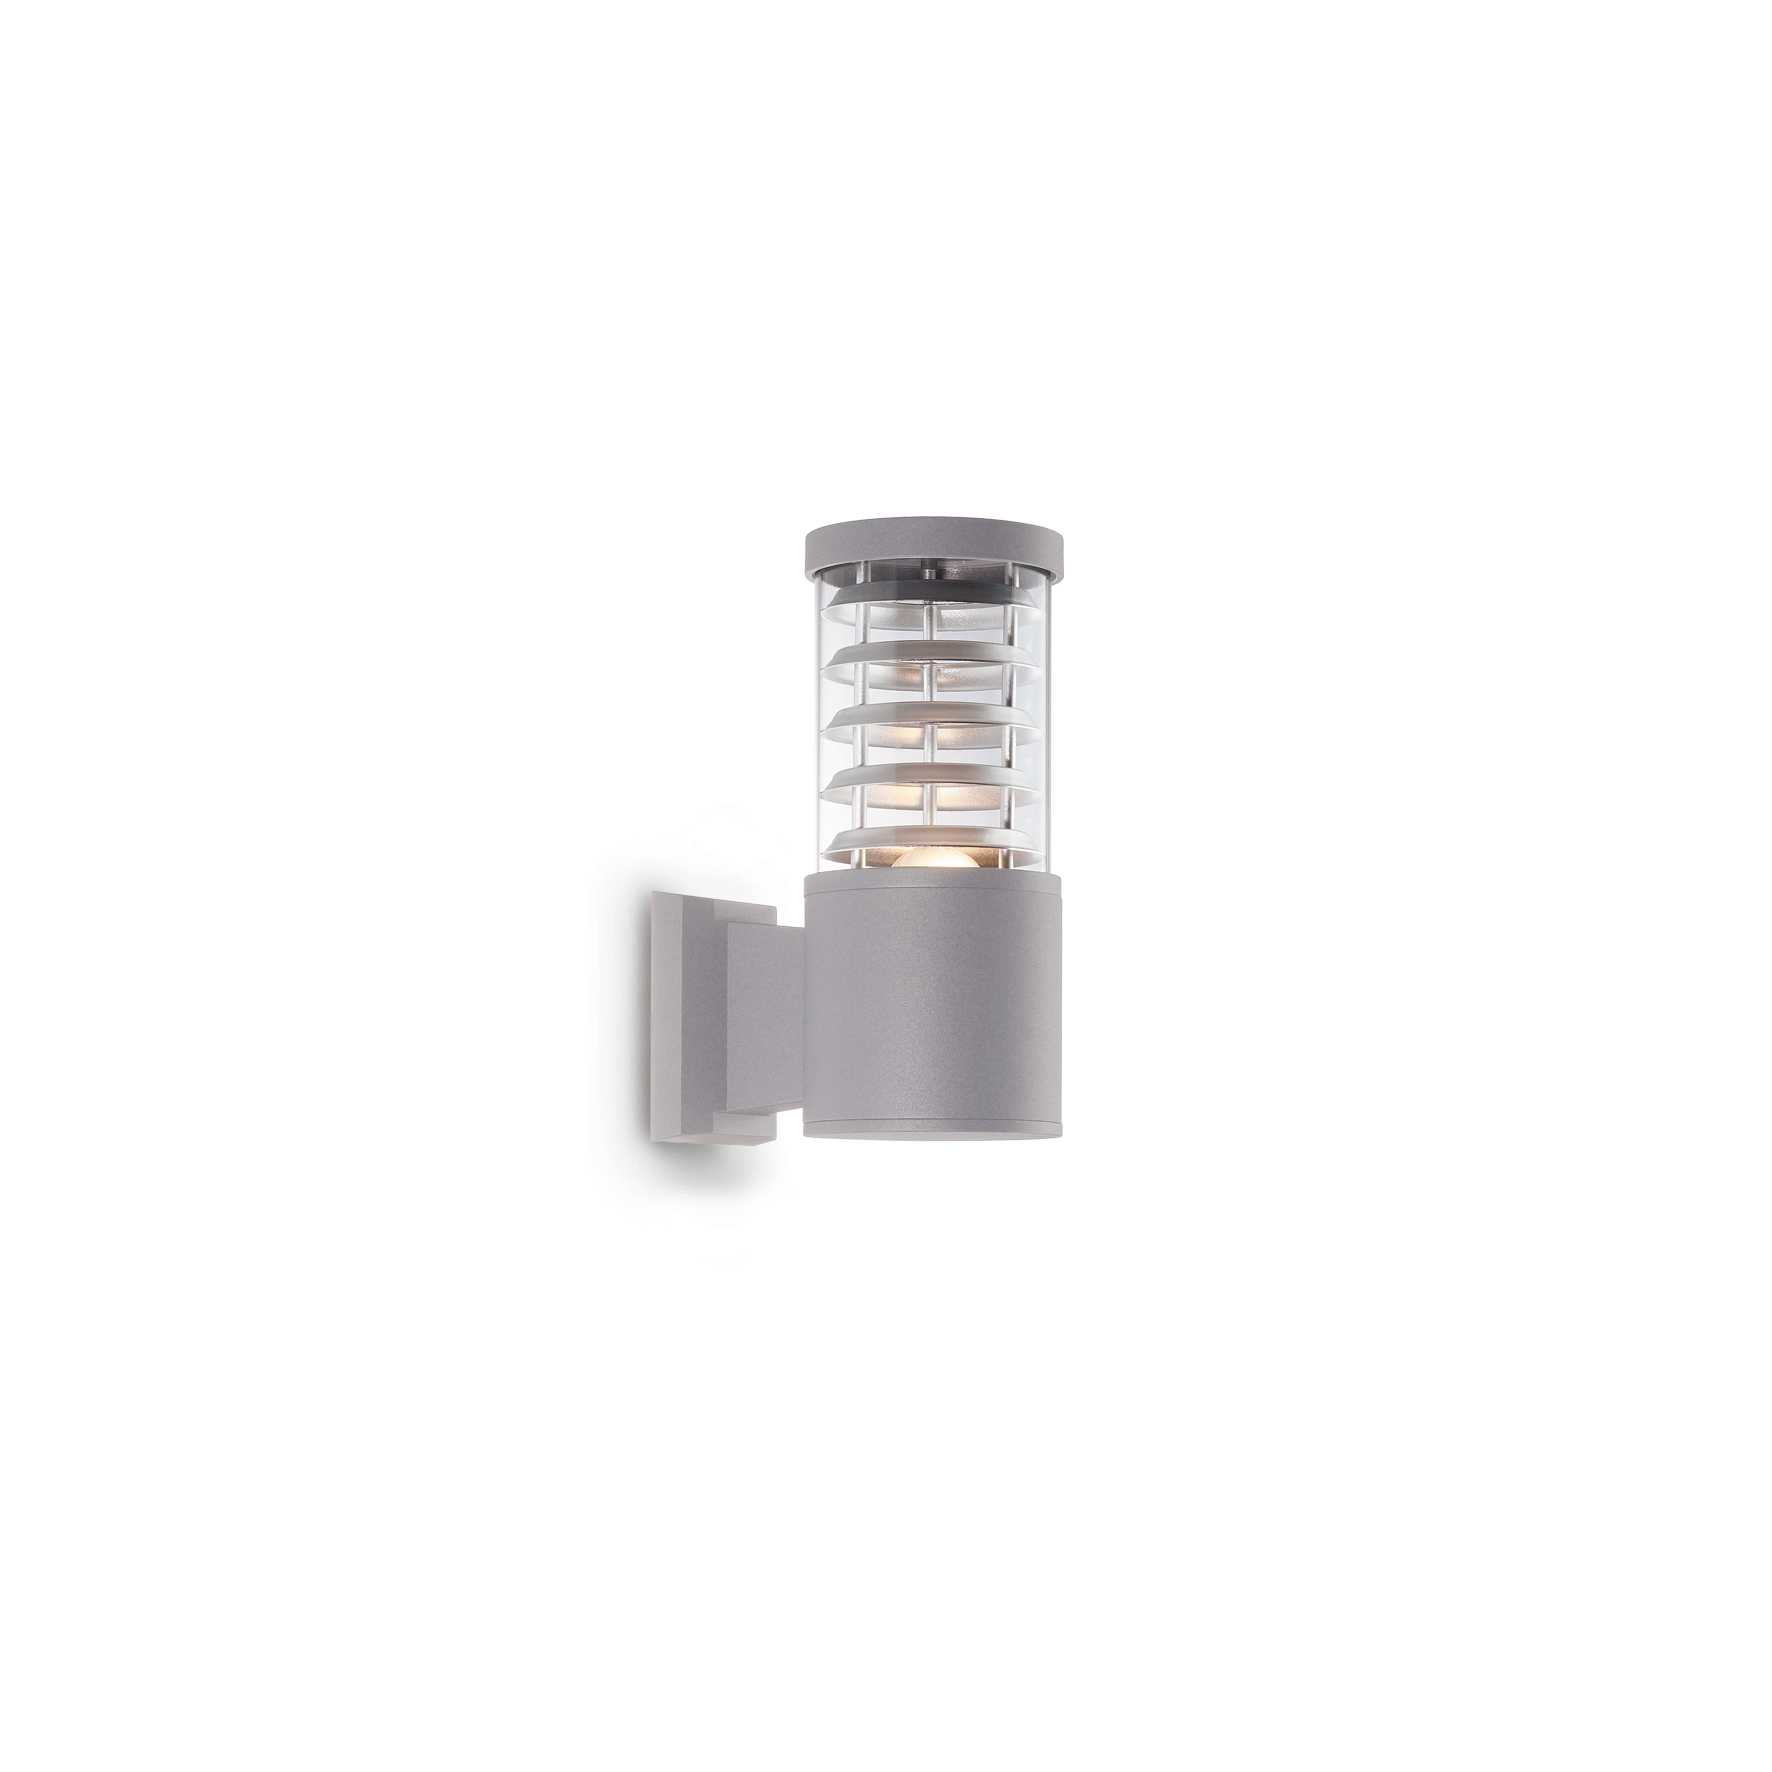 AD hotelska oprema Vanjska zidna lampa Tronco ap1- Sive boje slika proizvoda